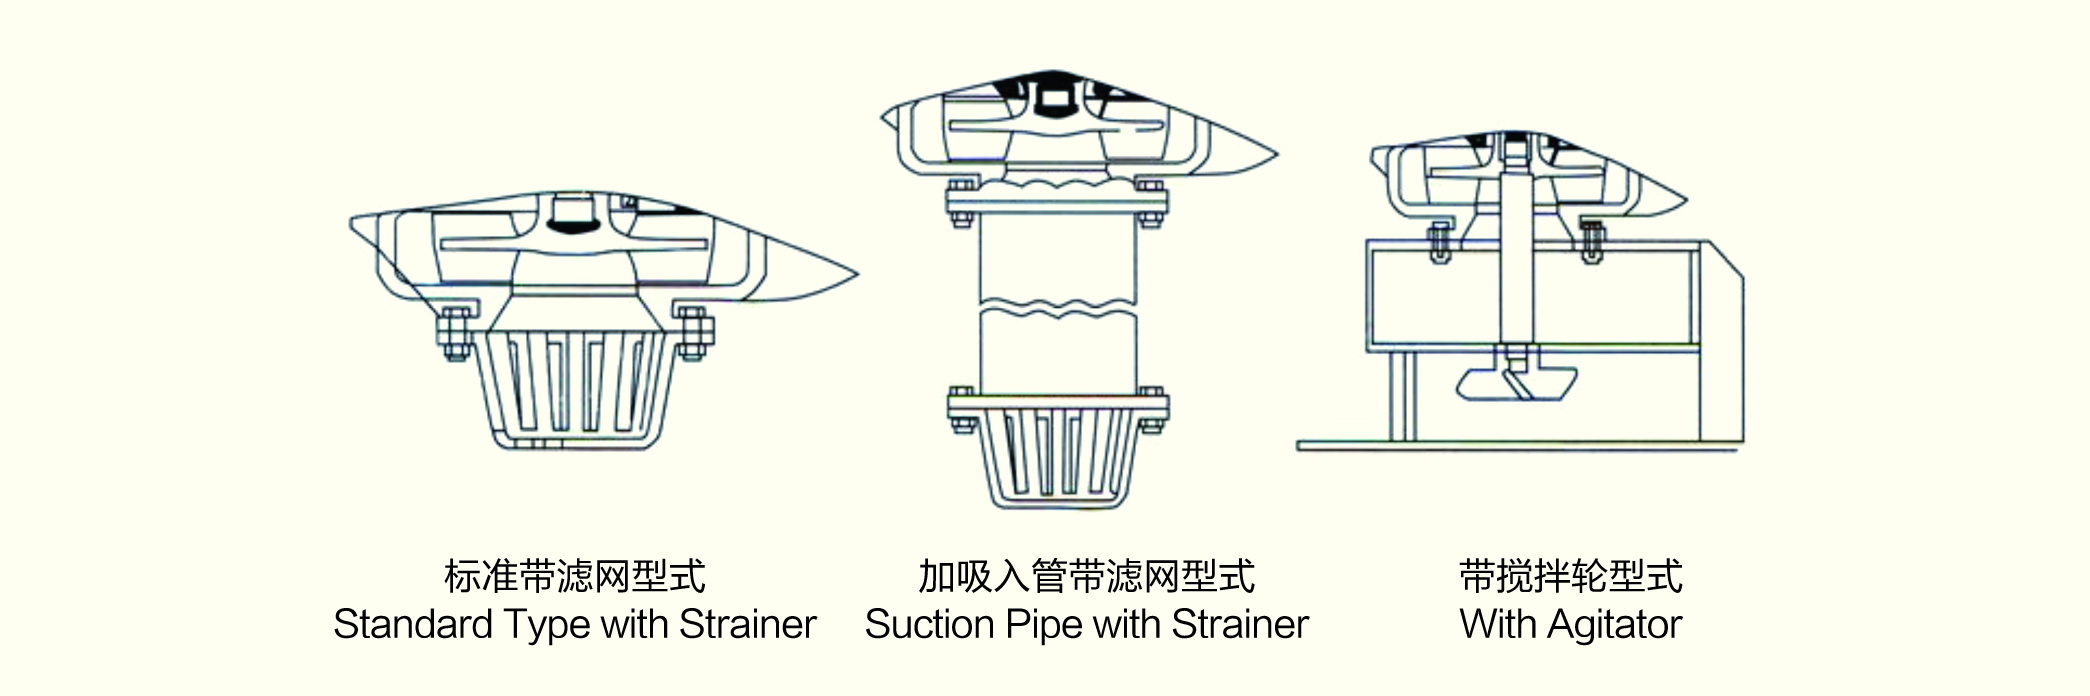 TSP(R) Vertical Slurry Pump 3 kinds of inlet construction